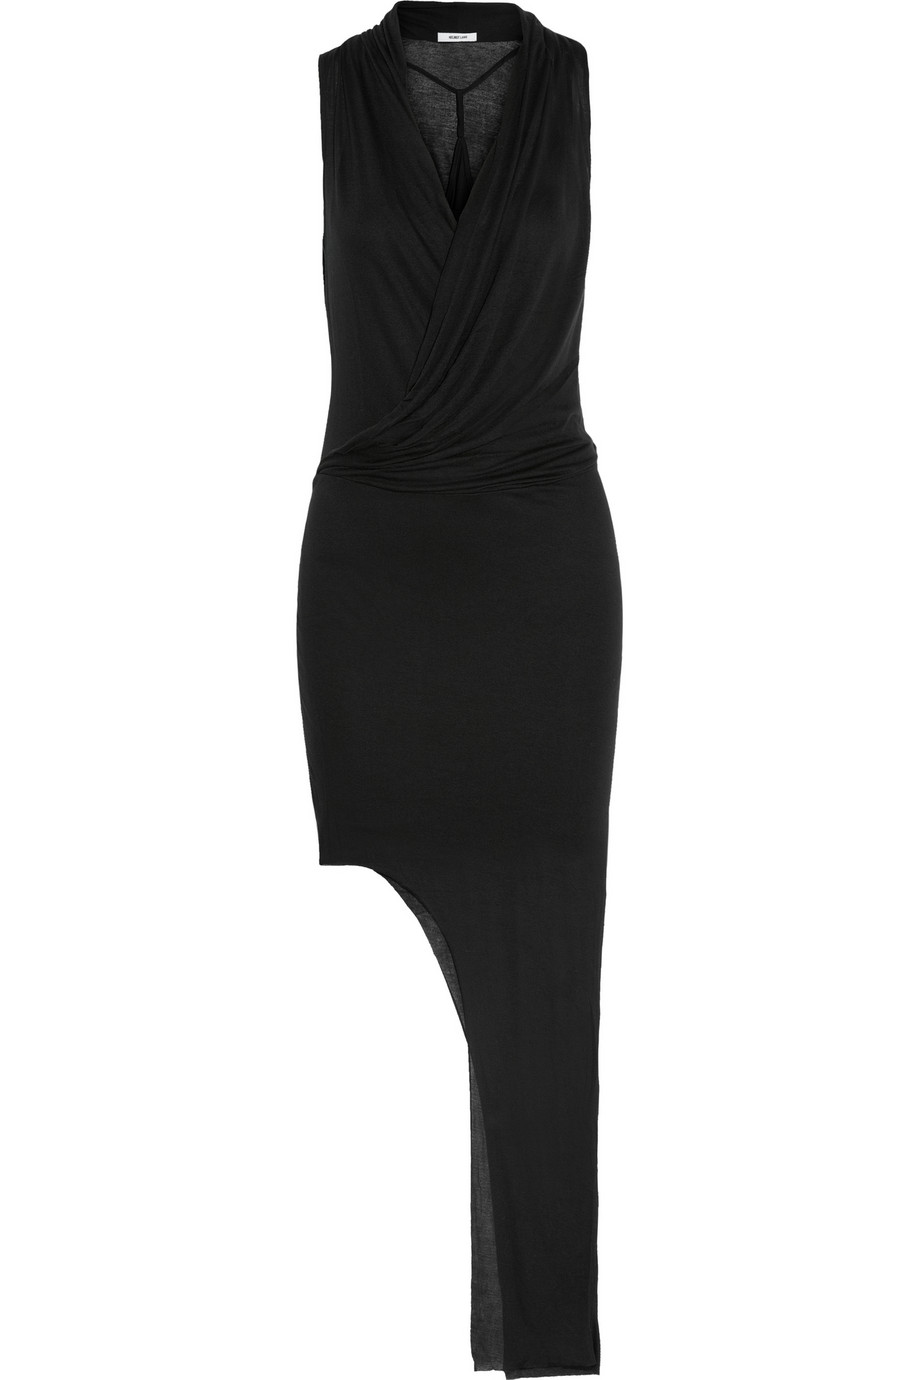 Lyst - Helmut lang Asymmetric Lightweight Jersey Maxi Dress in Black